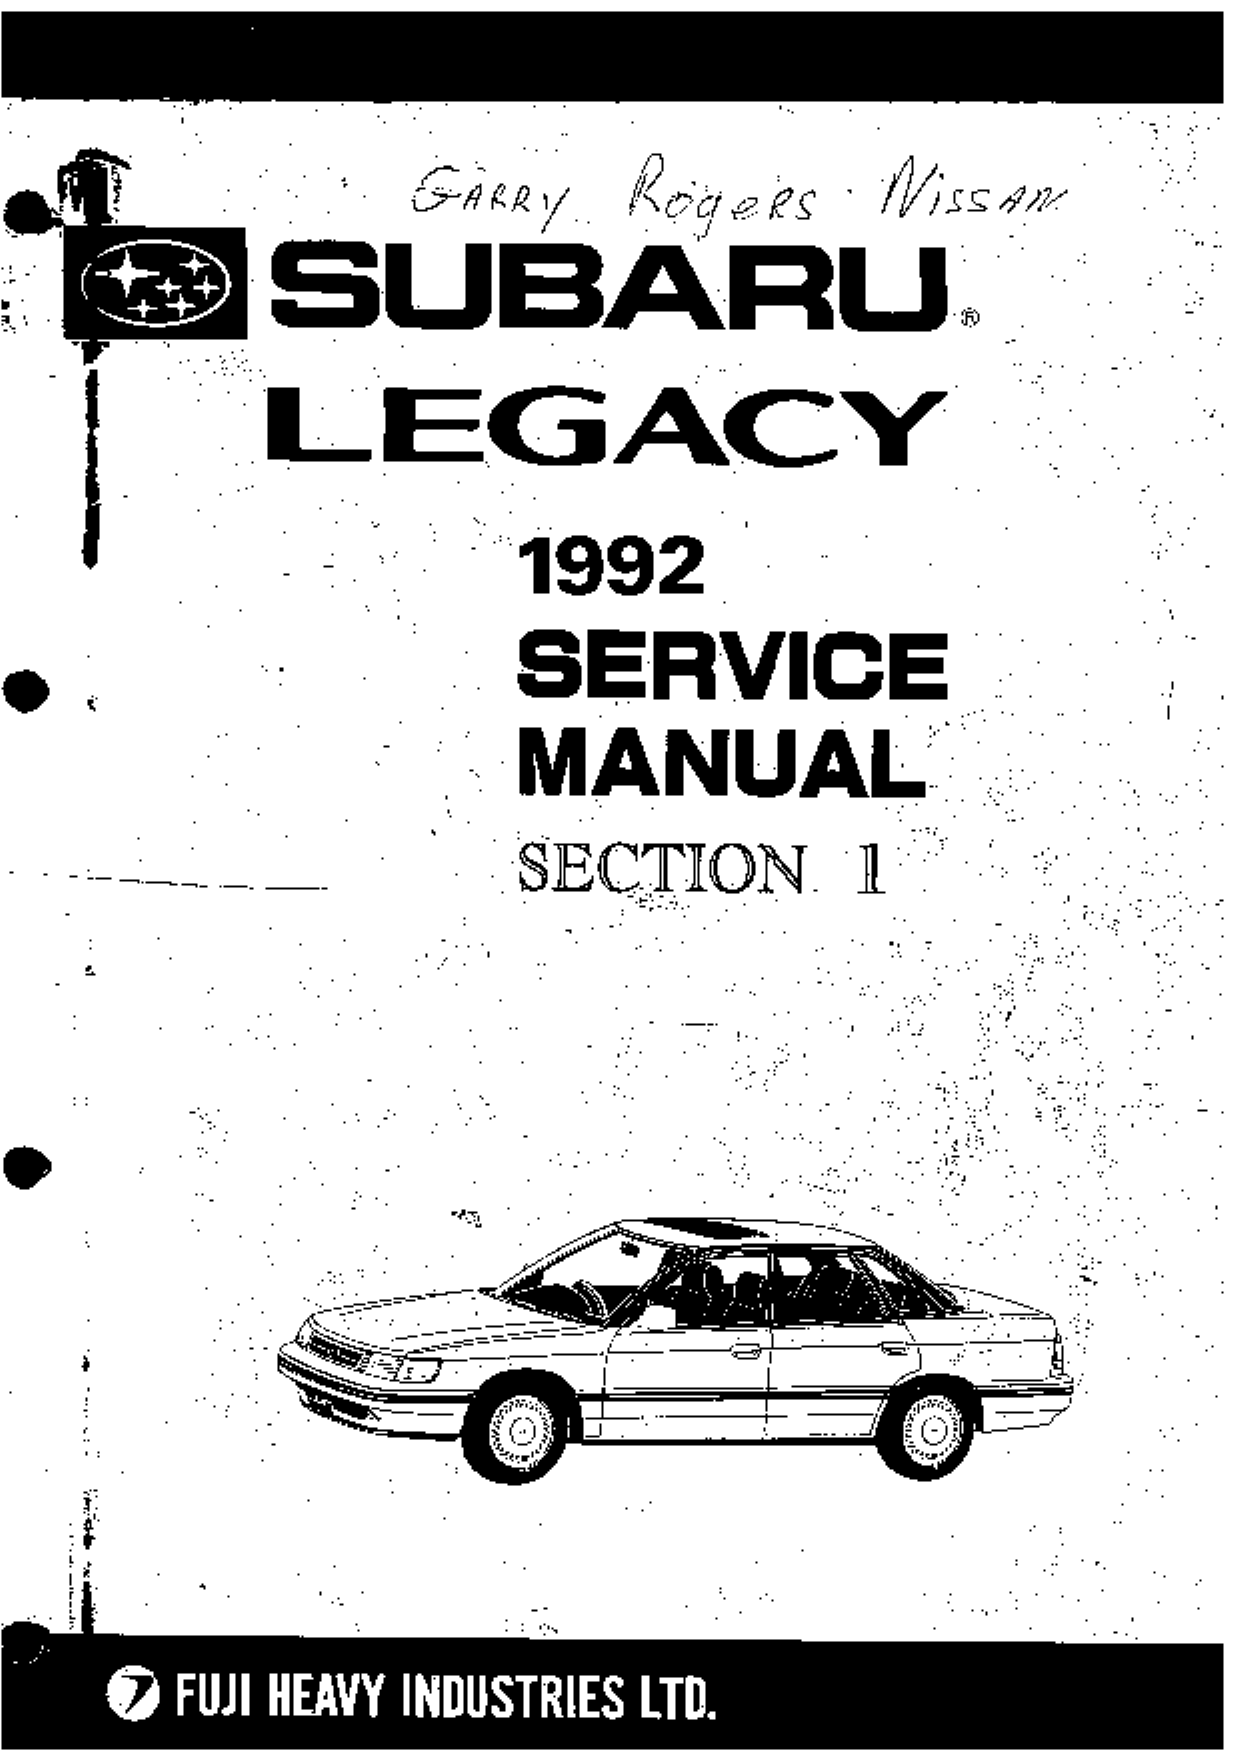 1992 Subaru Legacy service manual Preview image 1